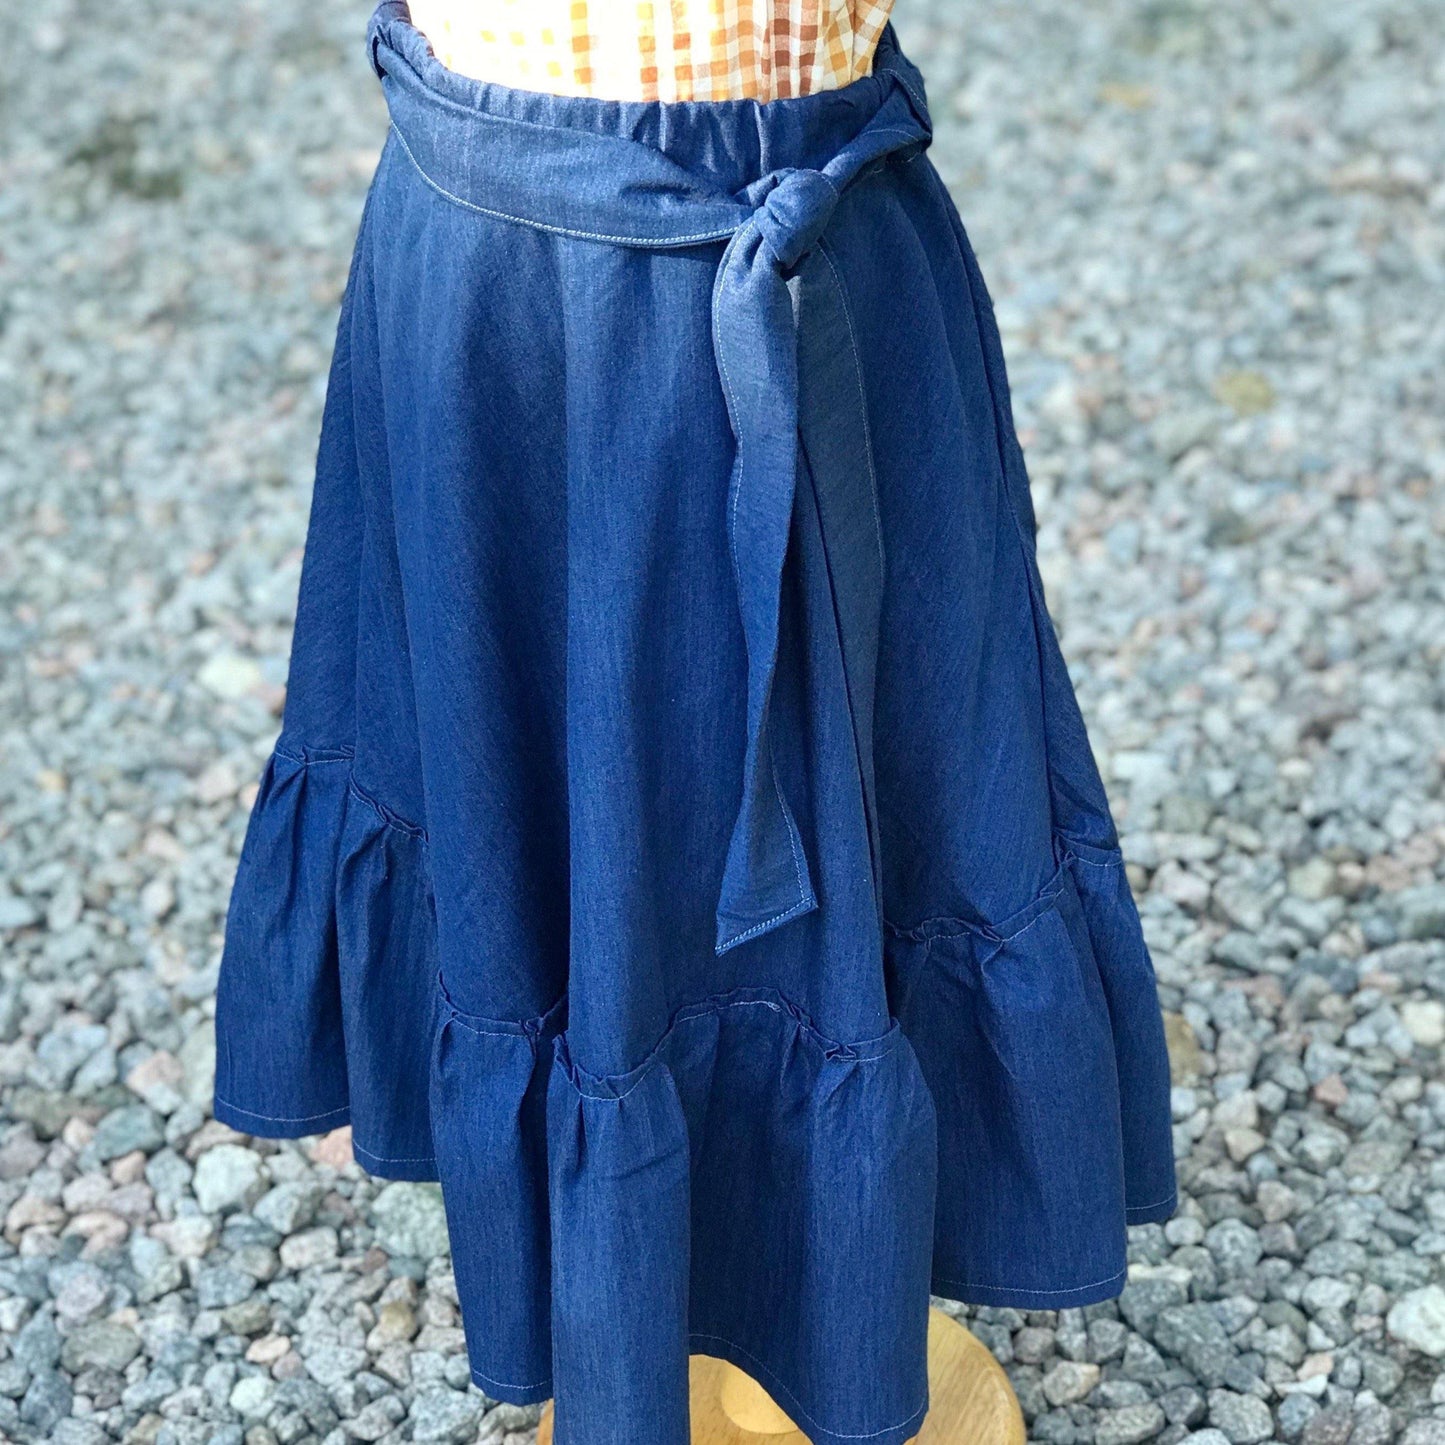 Denim Modern Prairie Skirt-Modesty n Mind-Girls' Clothing,Grow-with-me Clothing,Made to Order